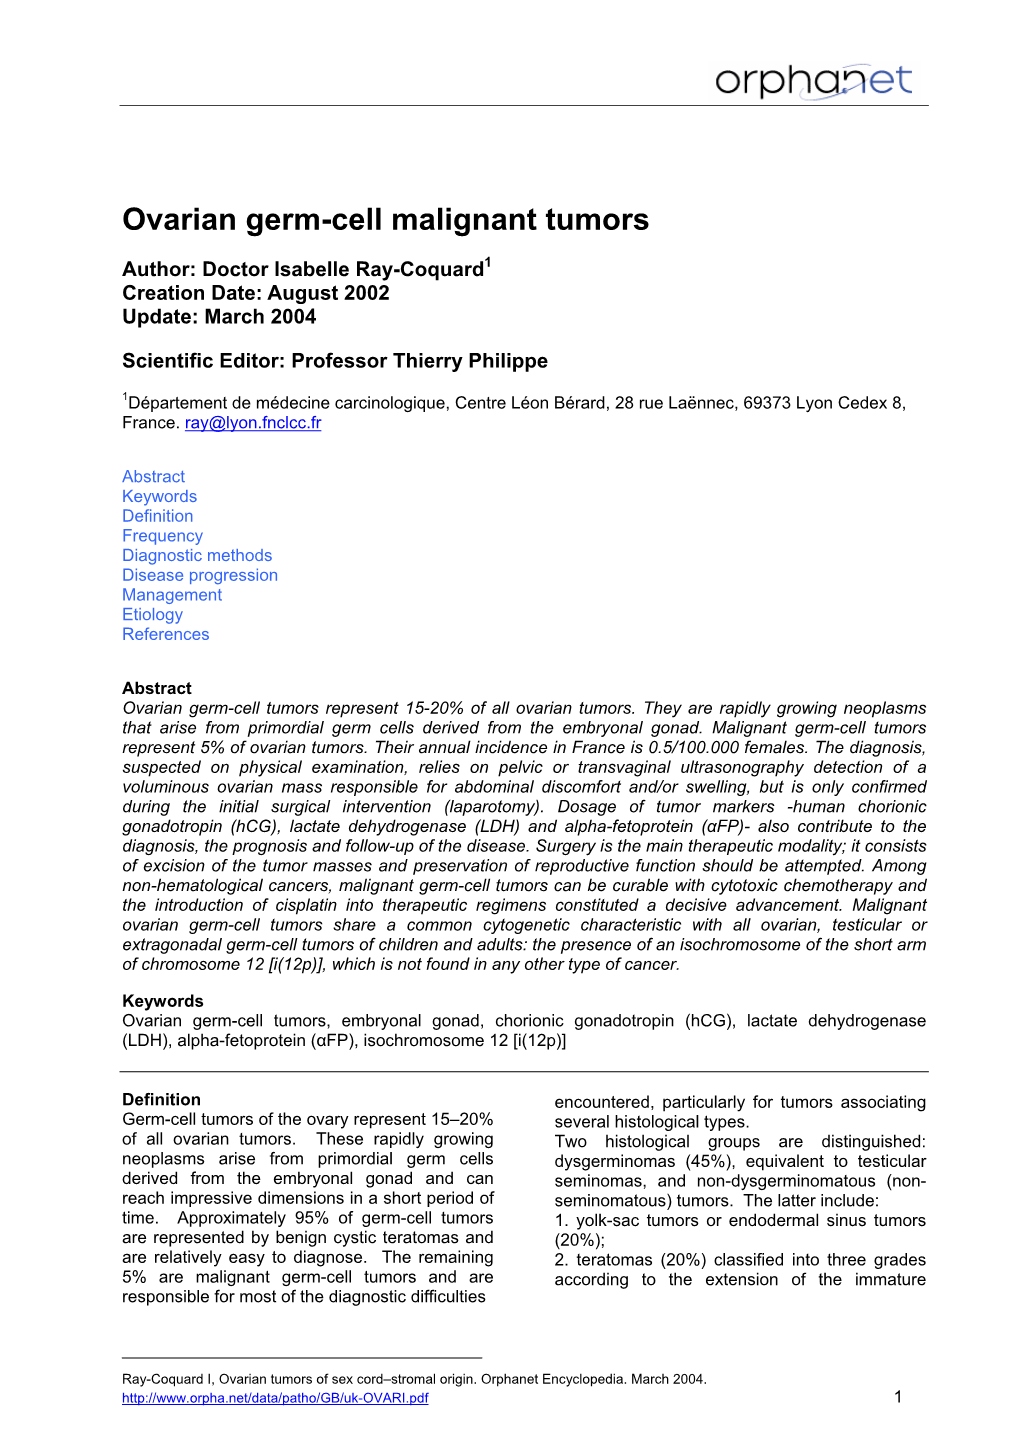 Ovarian Germ-Cell Malignant Tumors